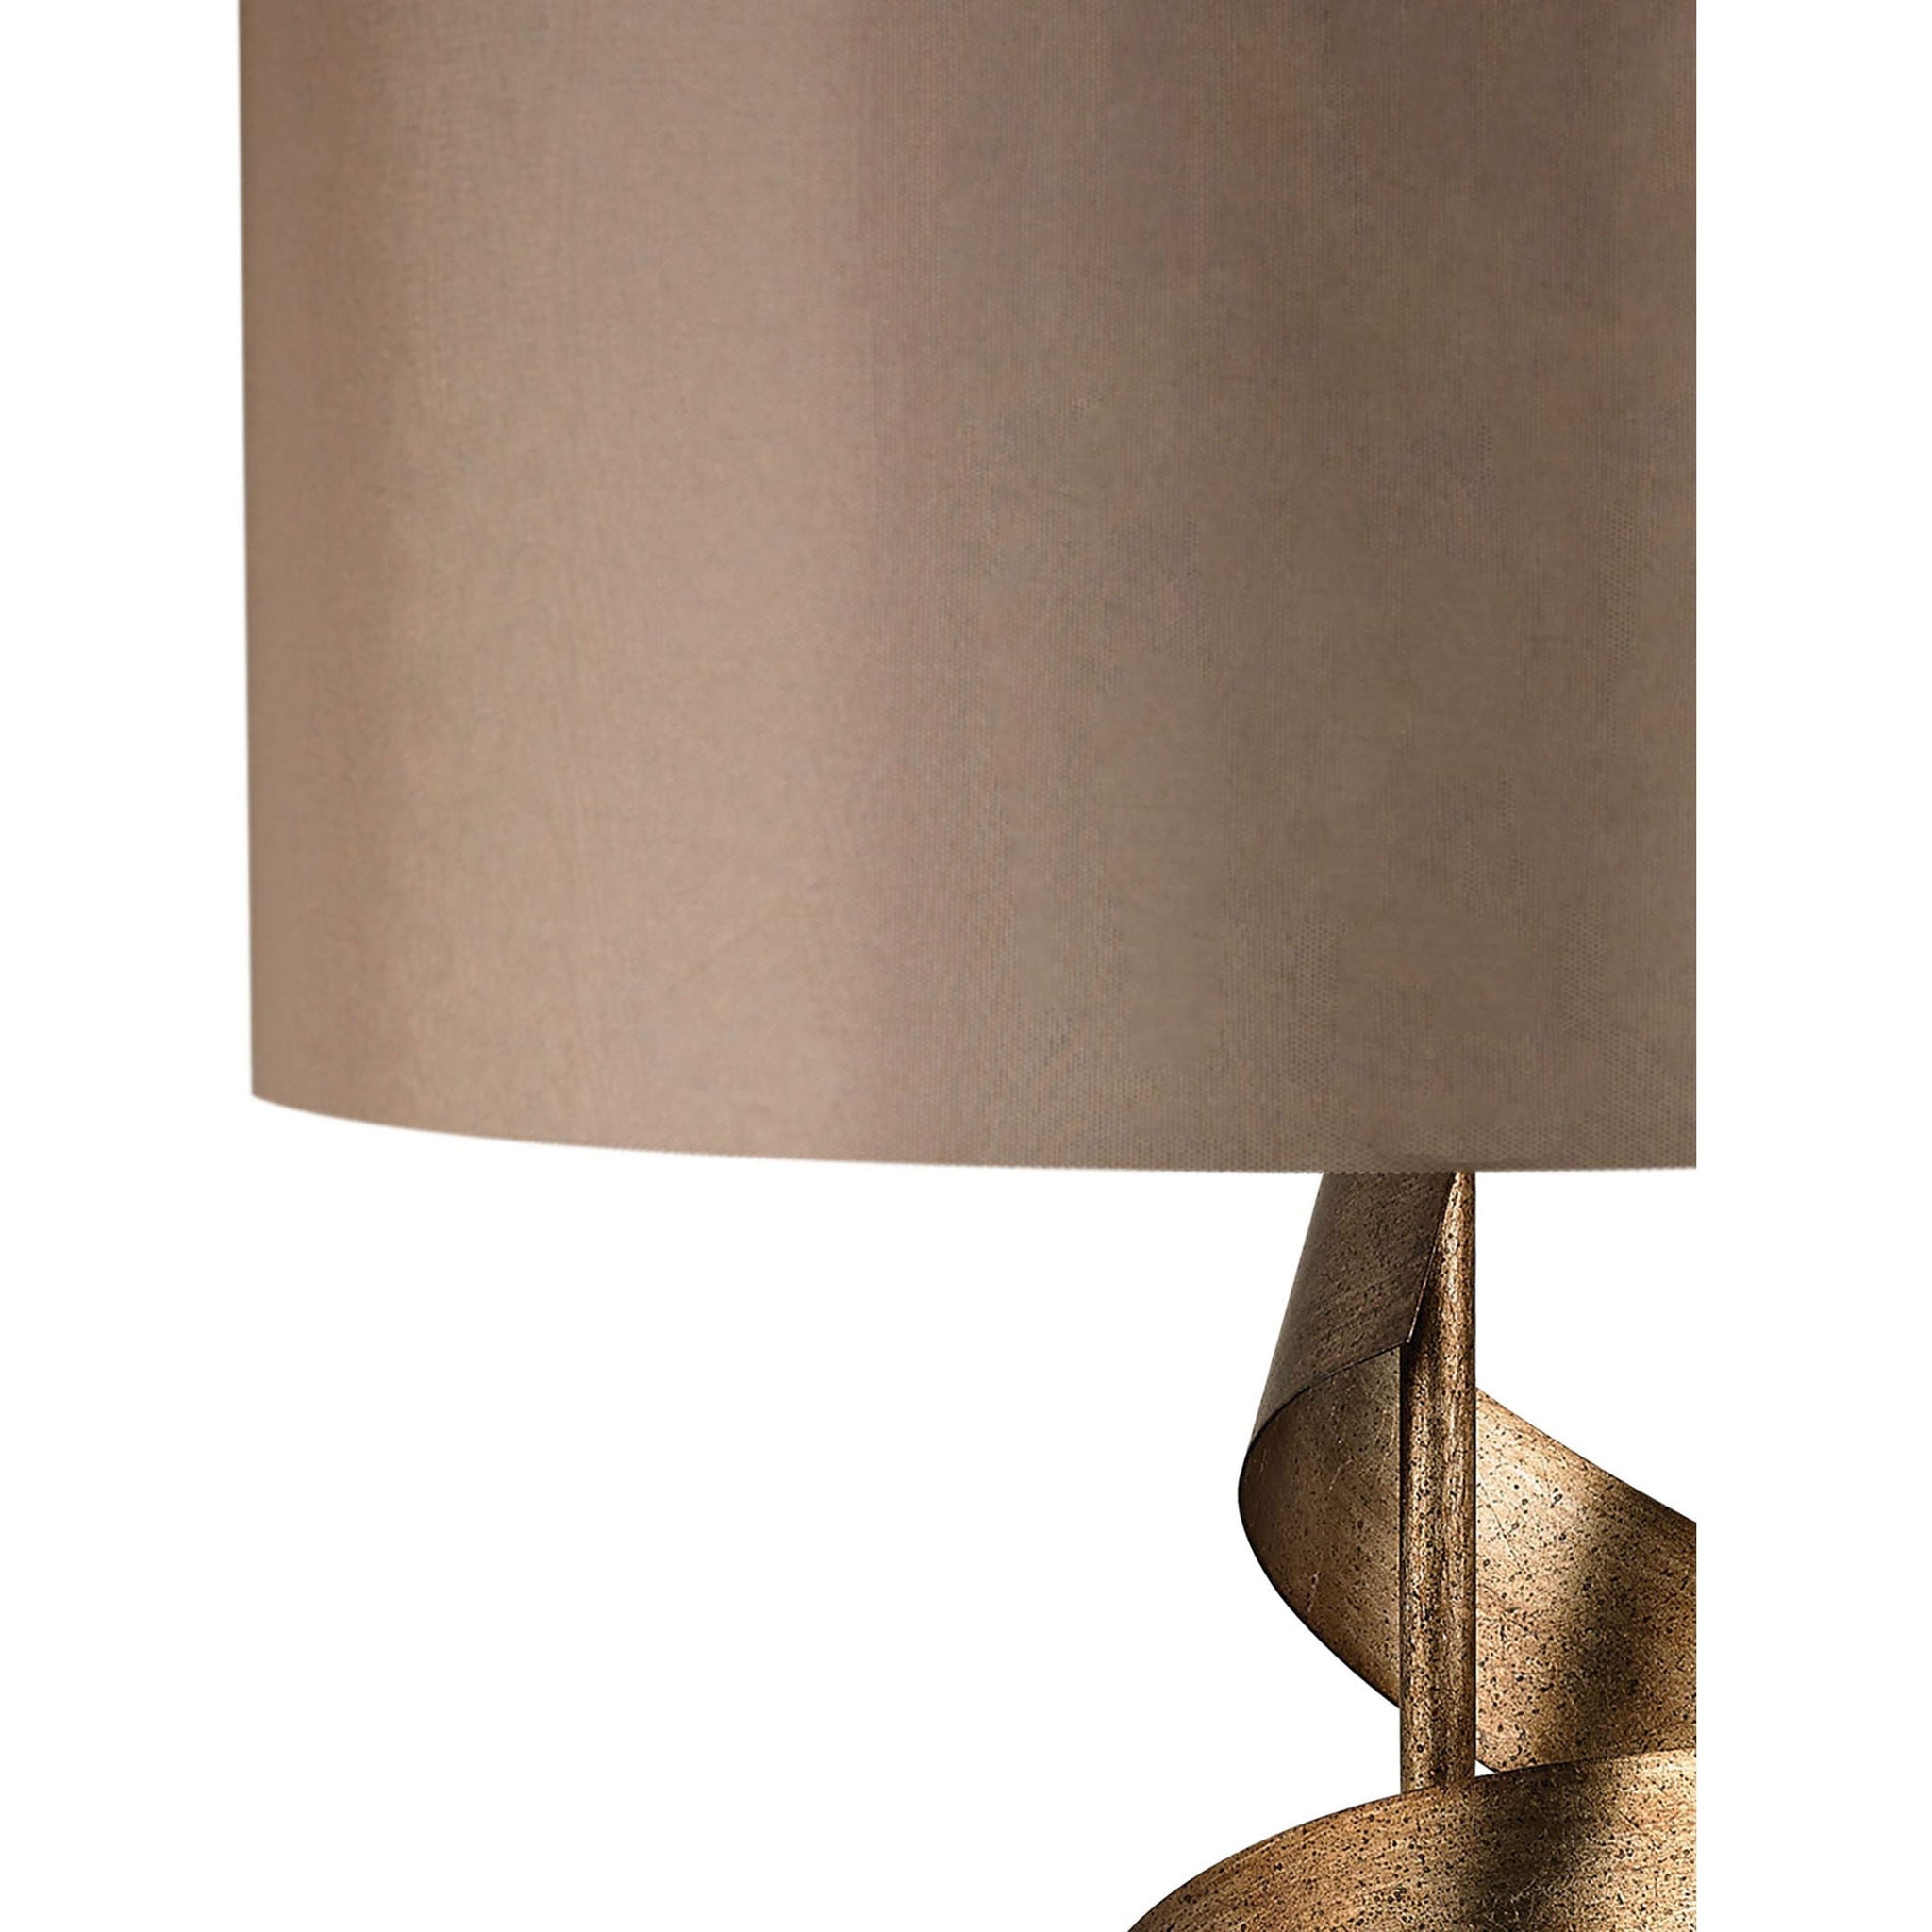 Allen 29" High 1-Light Table Lamp